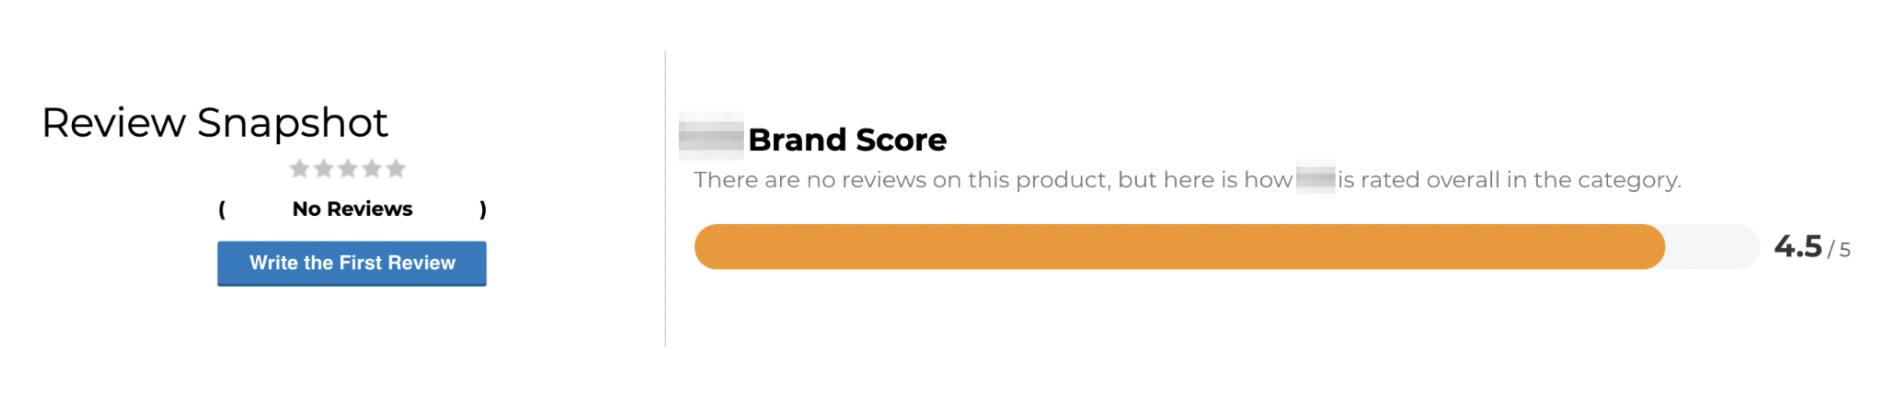 Brand_Score.png